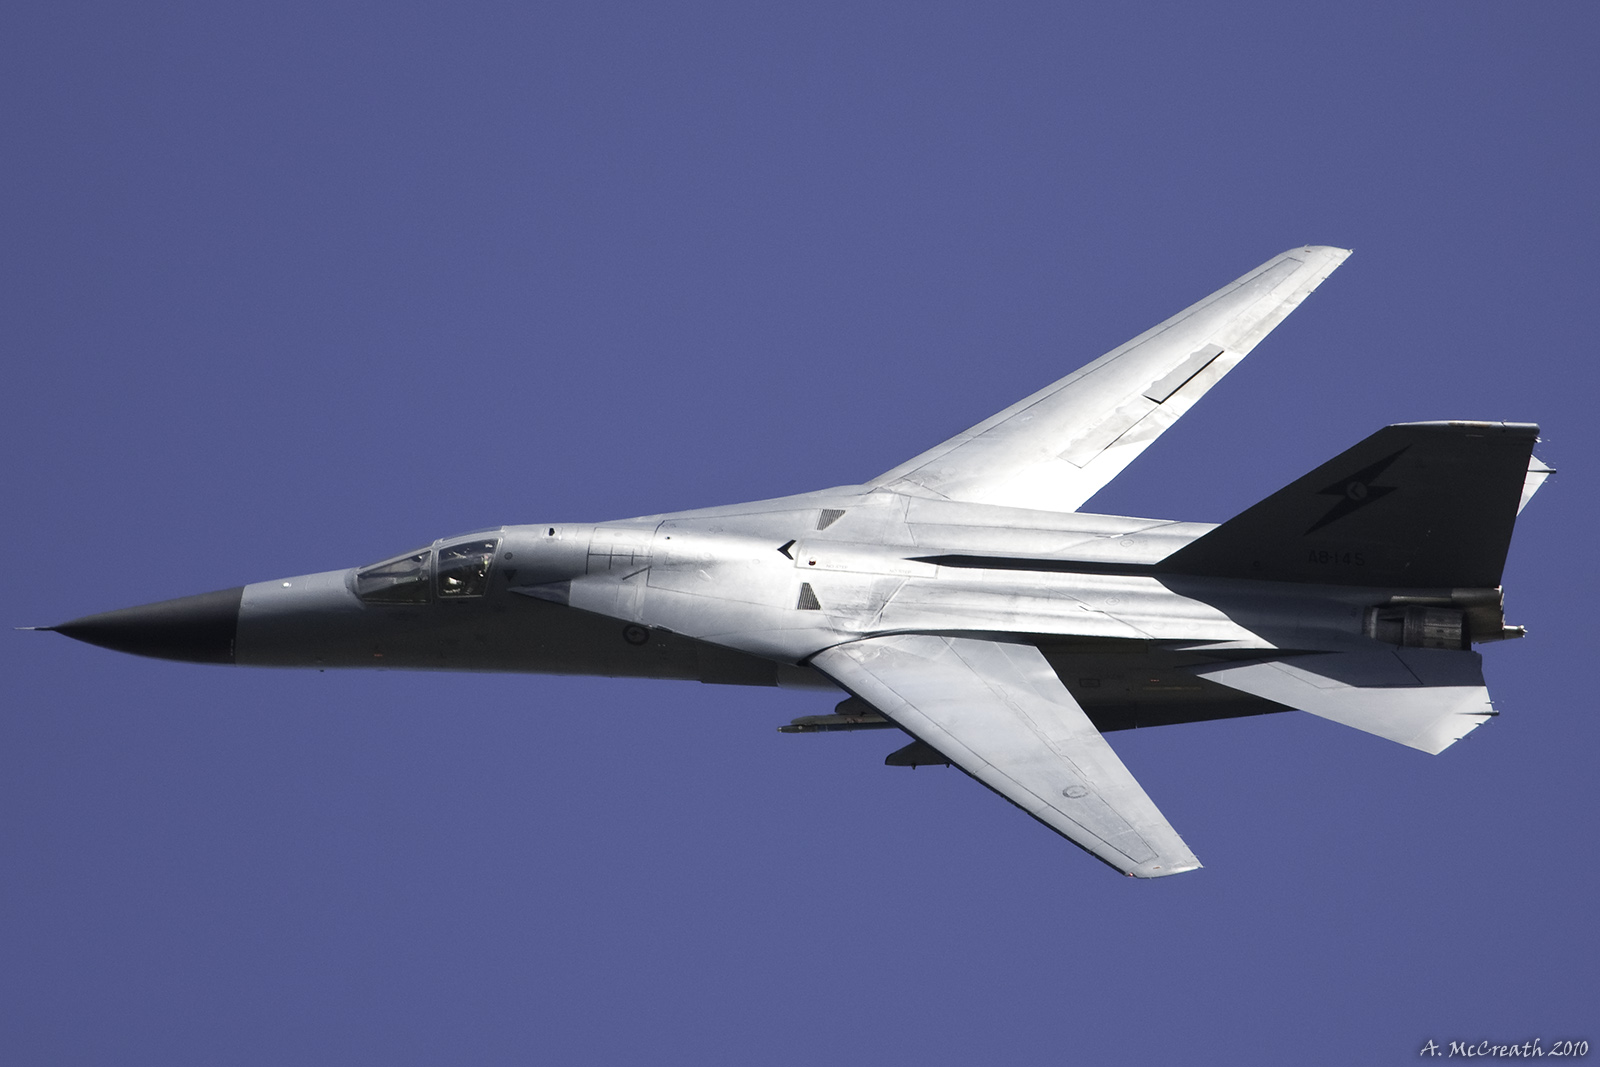 RAAF F-111 26 Sep 08 (1600 pxl wide)